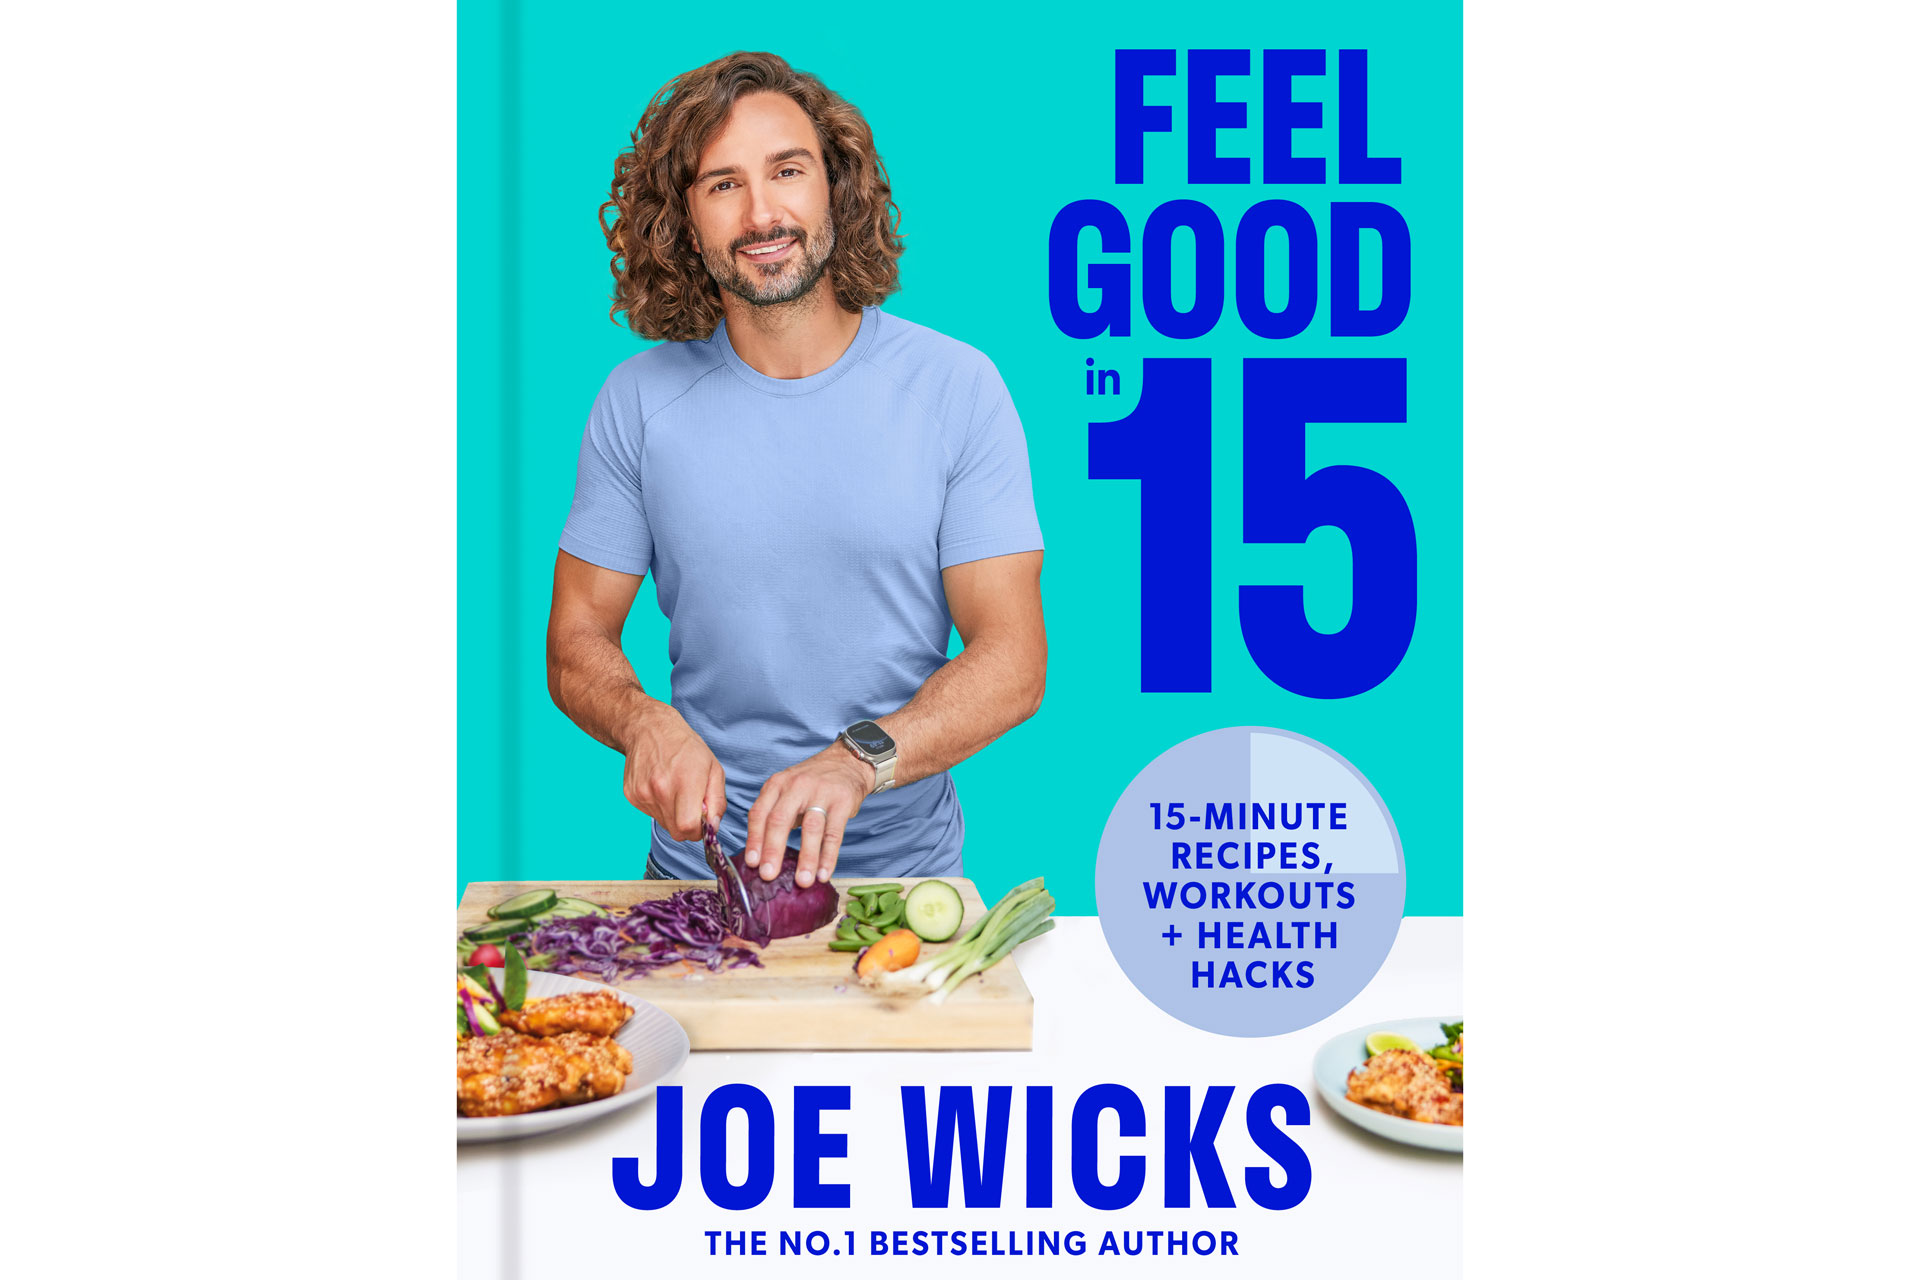 The cover of Feel Good In 15 by Joe Wicks